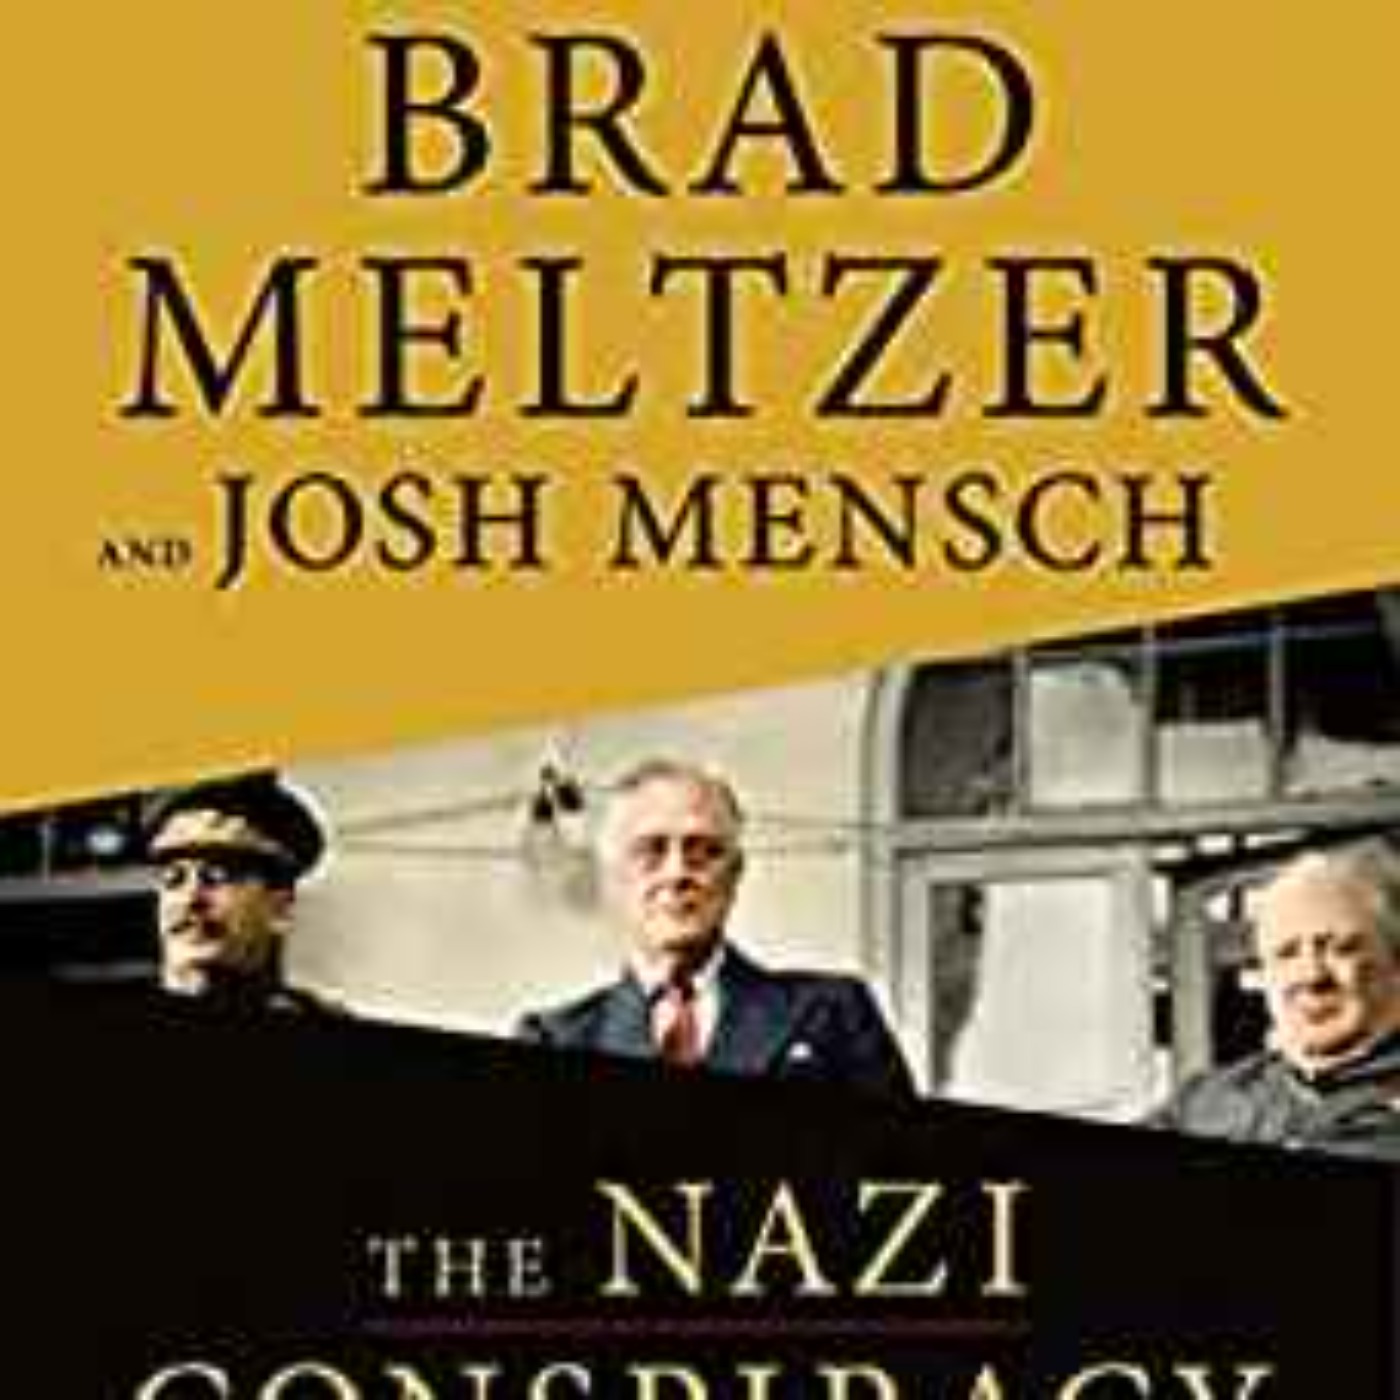 Brad Meltzer - The Nazi Conspiracy